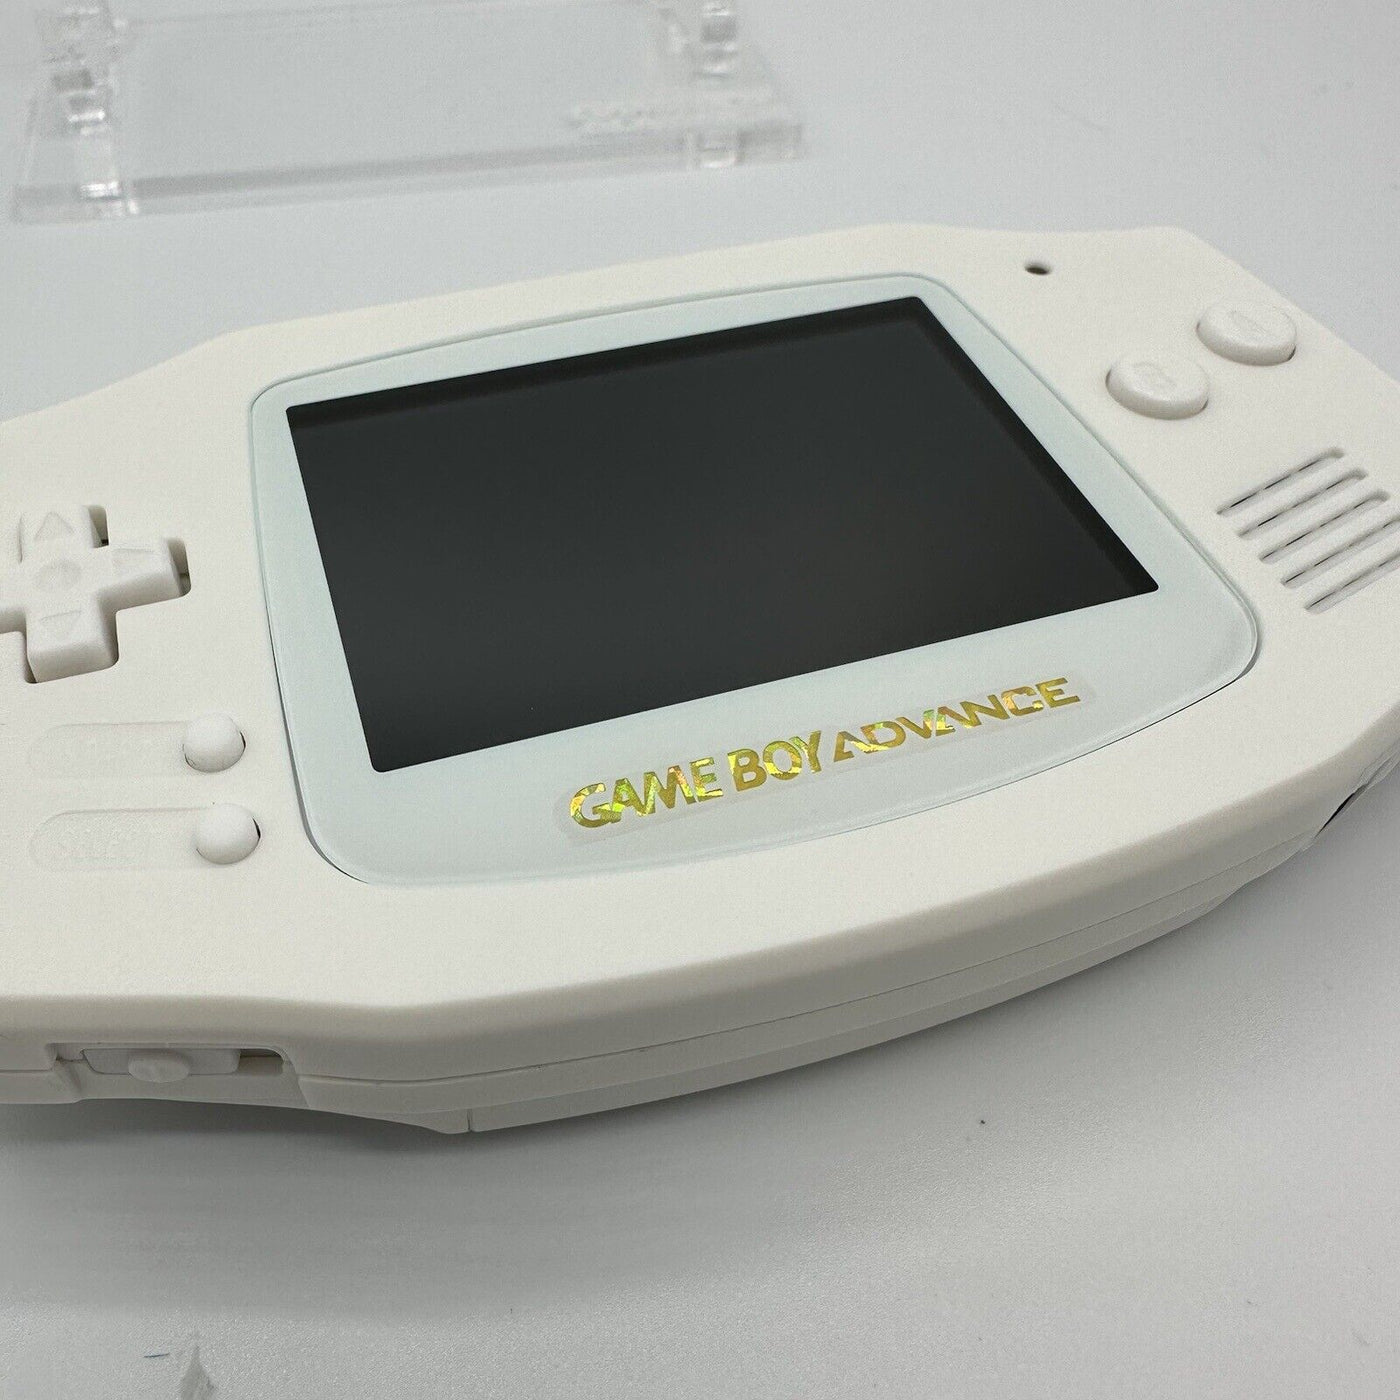 Game Boy Advance IPS V2 Console - White